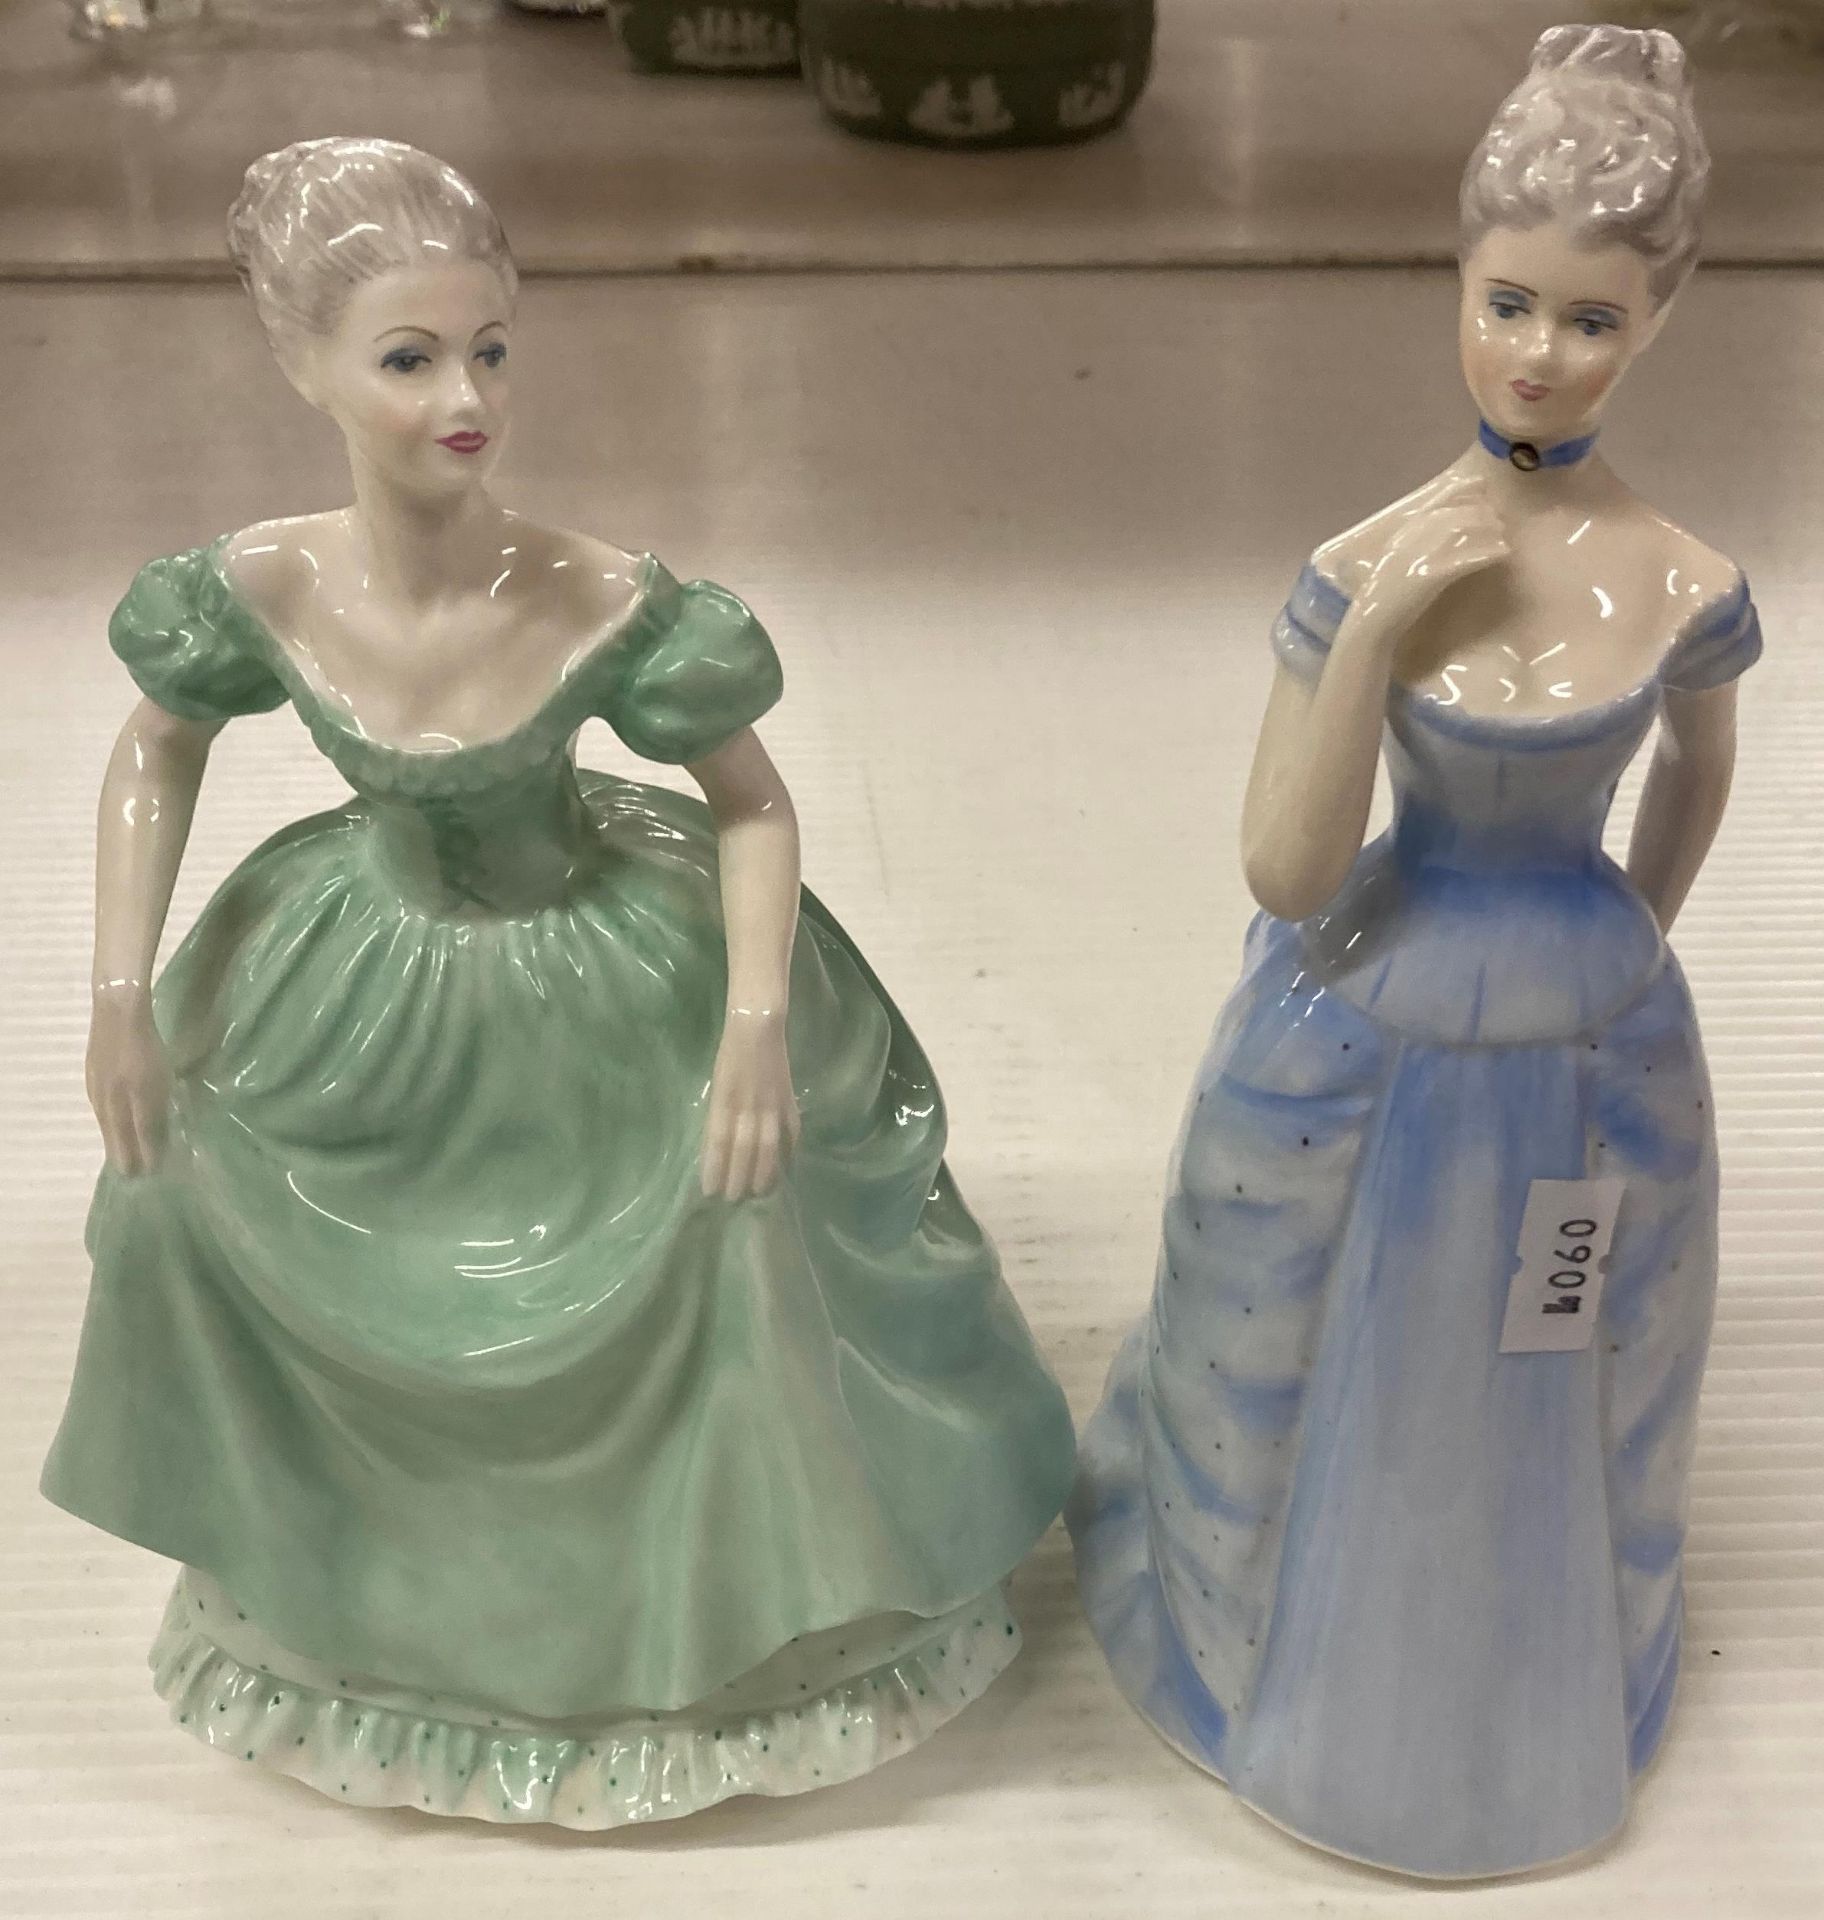 Two Coalport Bone China Ladies of Fashion figurines 'Henrietta' 20cm and 'Emma' 21cm (saleroom